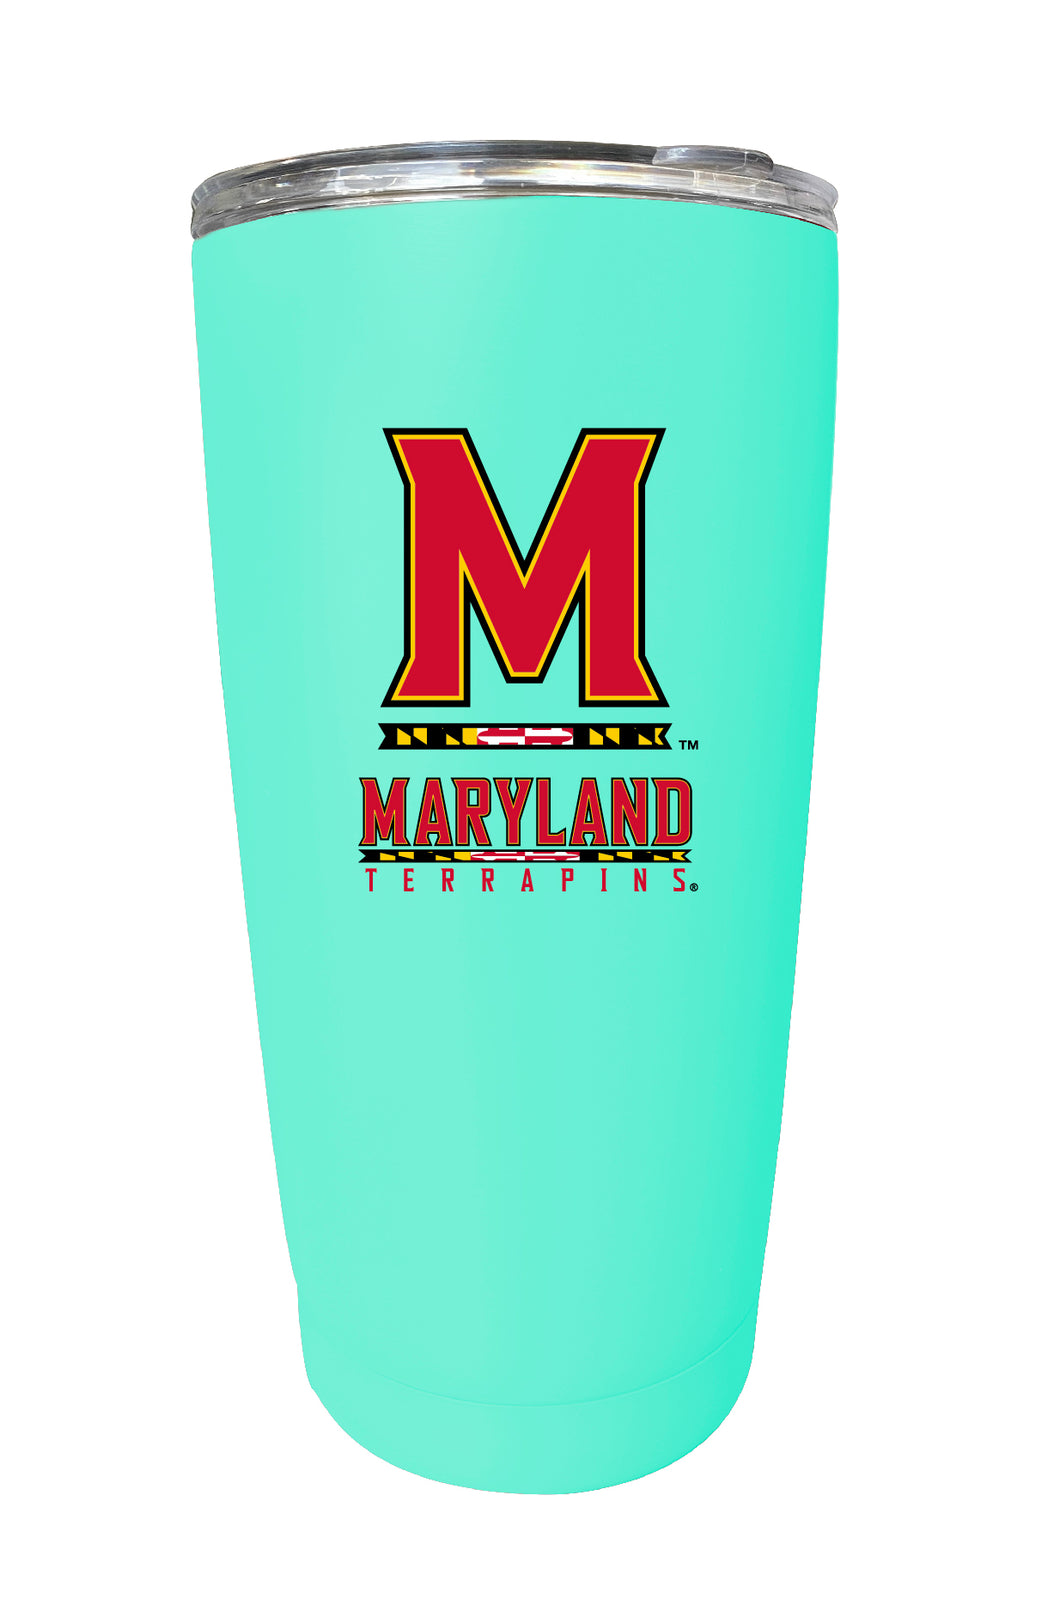 Maryland Terrapins NCAA Insulated Tumbler - 16oz Stainless Steel Travel Mug Seafoam